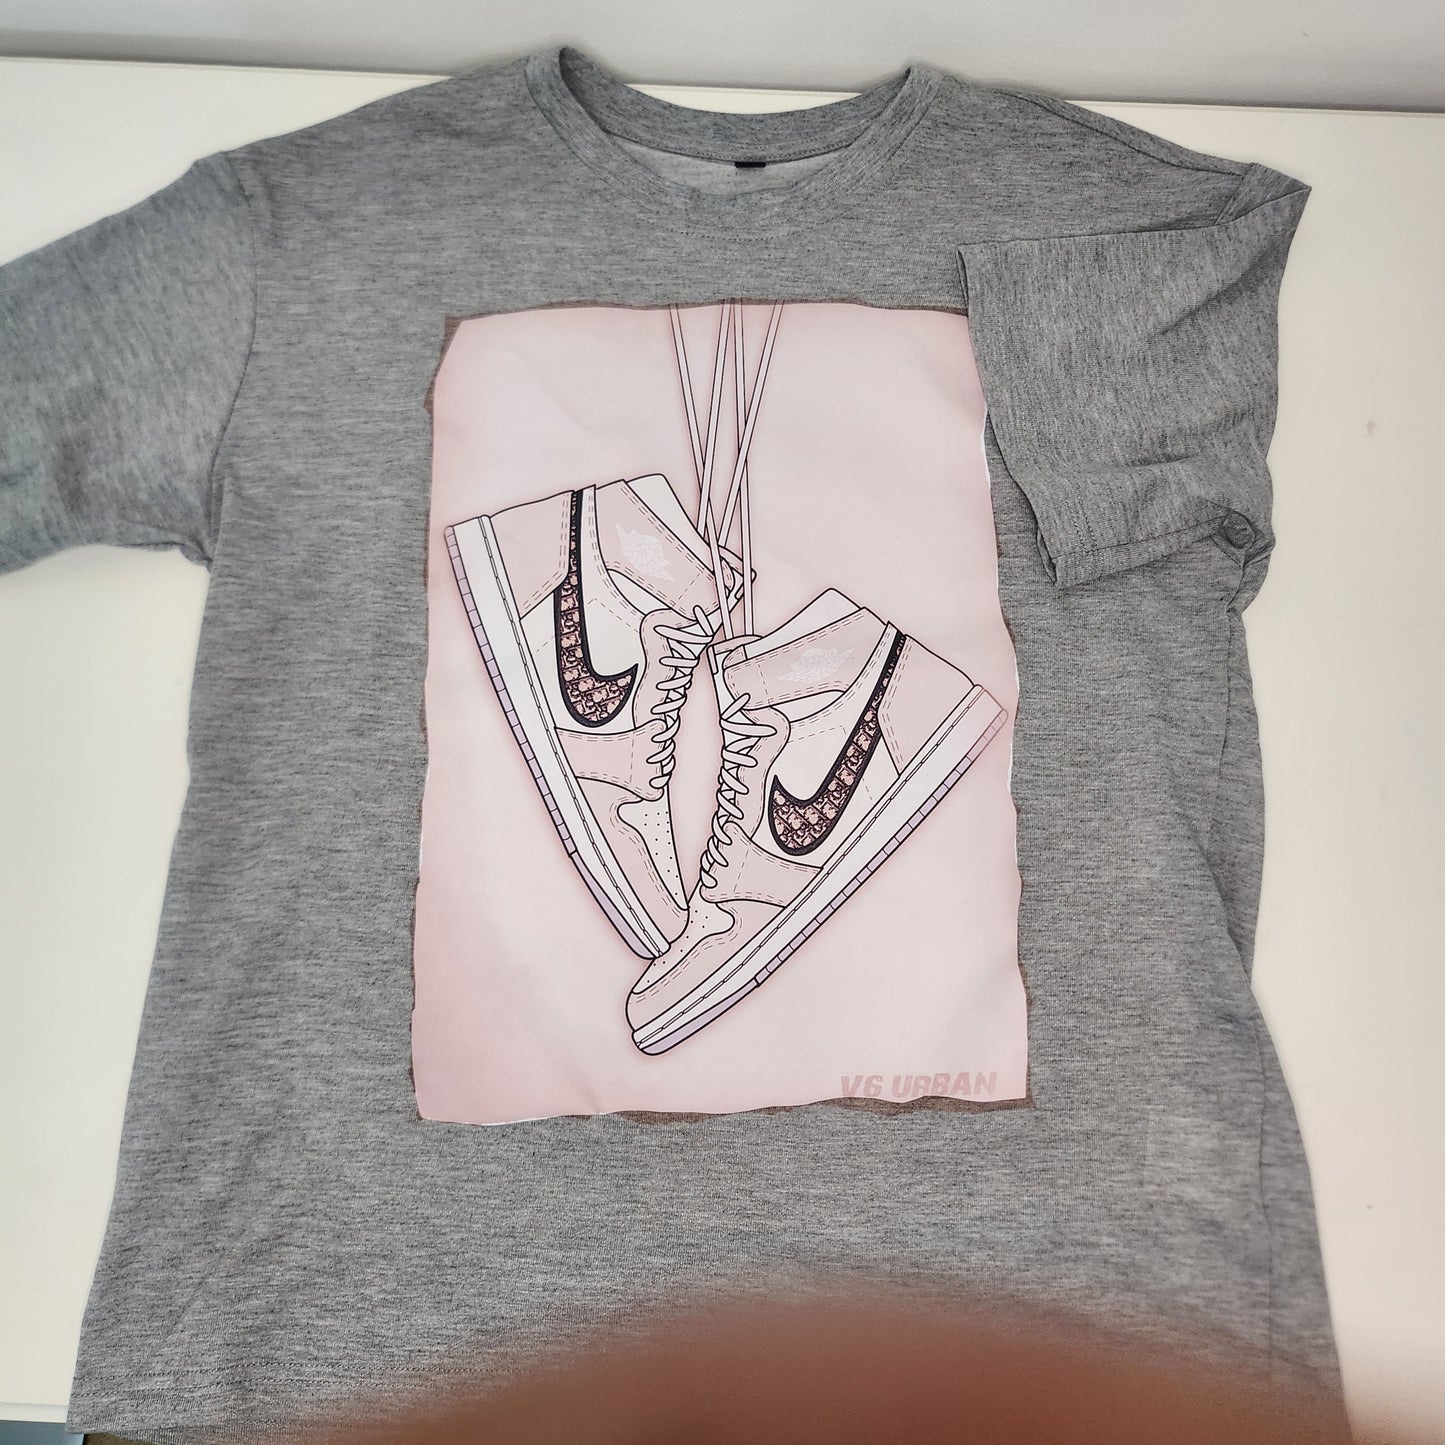 V6 Urban Jordan x Dior Graphics T-shirt